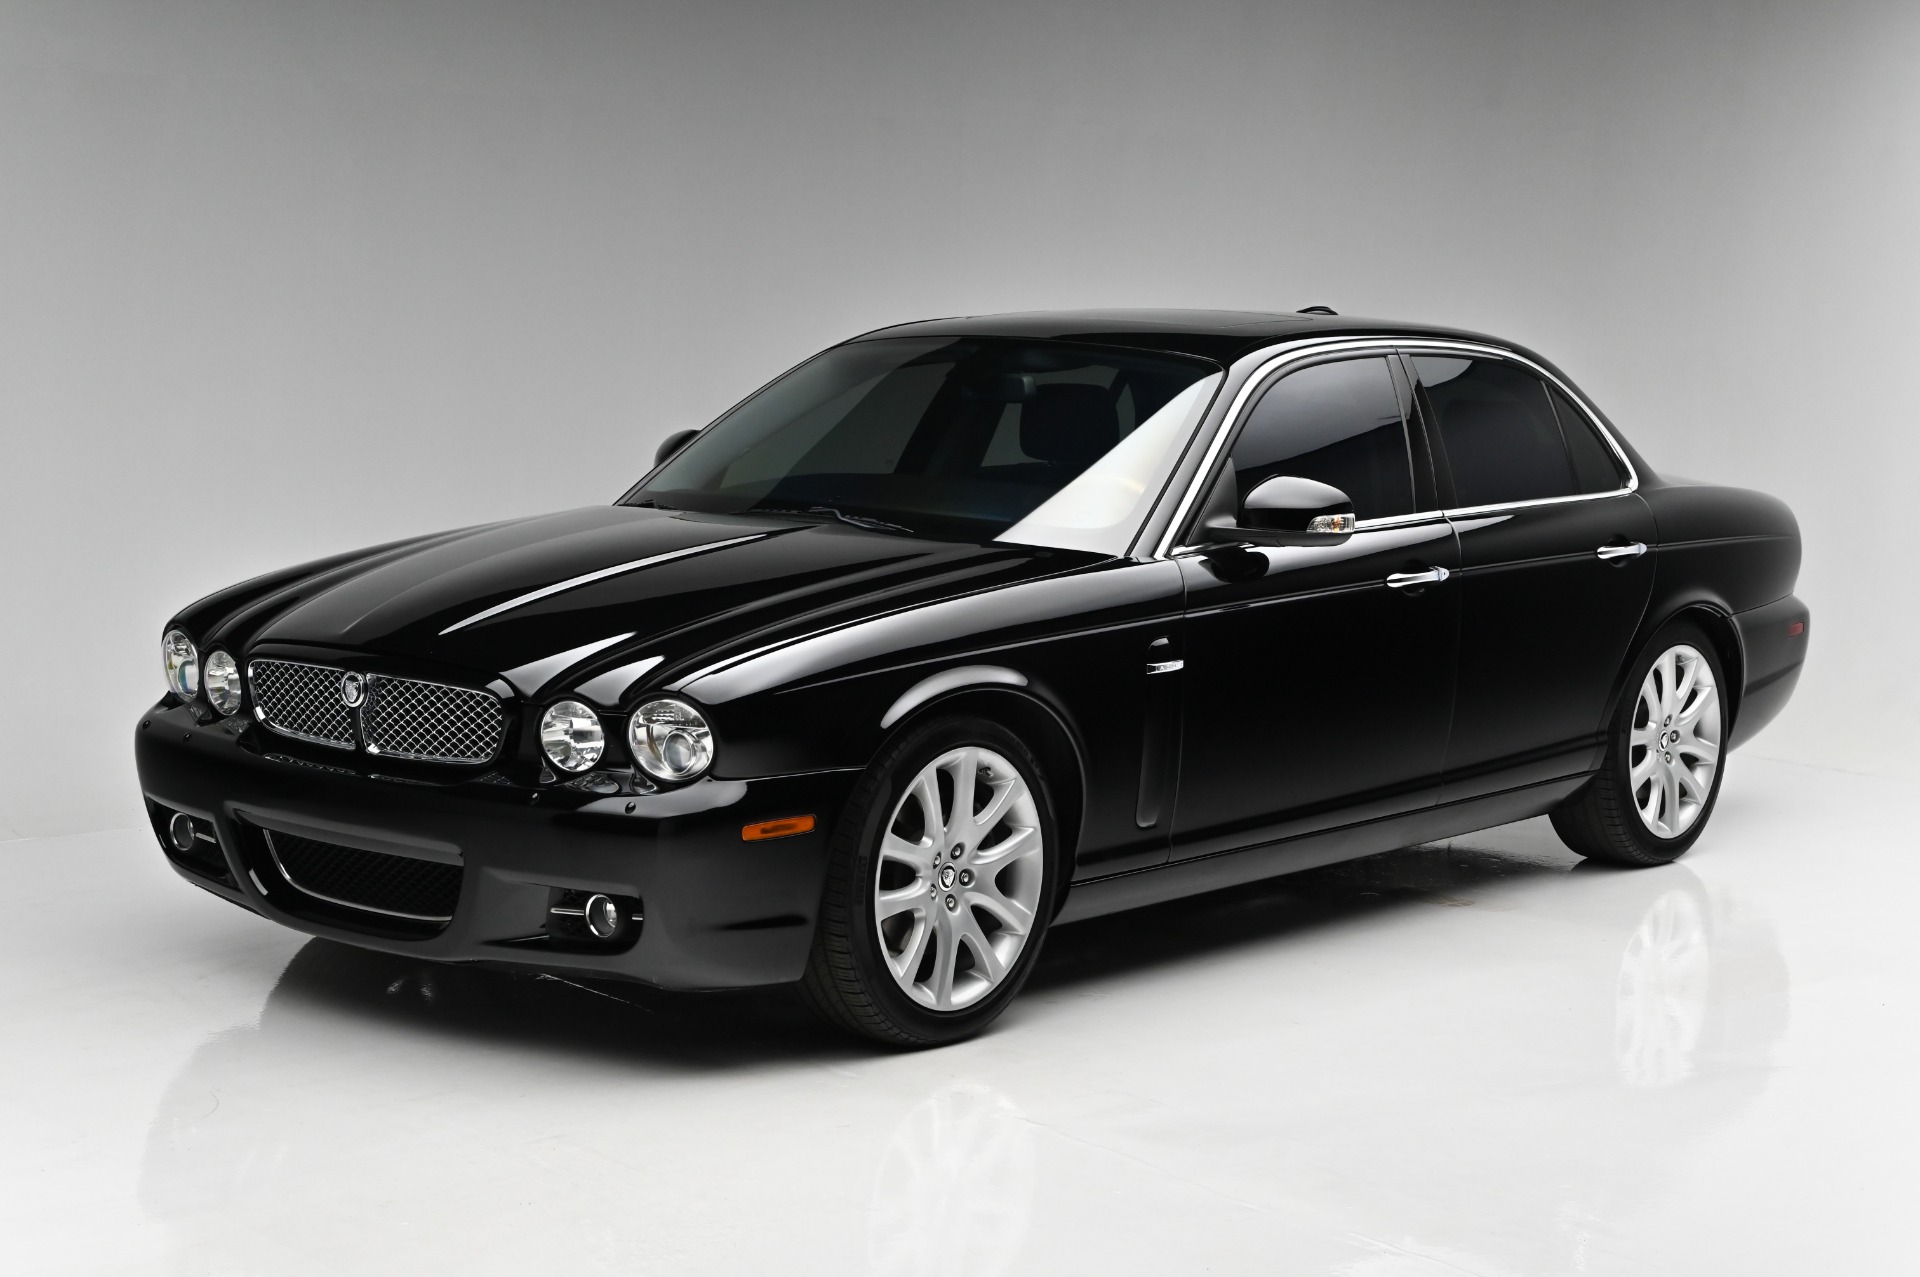 Used 2008 Jaguar Xj Xj8 Xj8 For Sale 22 995 Private Collection Motors Inc Stock B6249